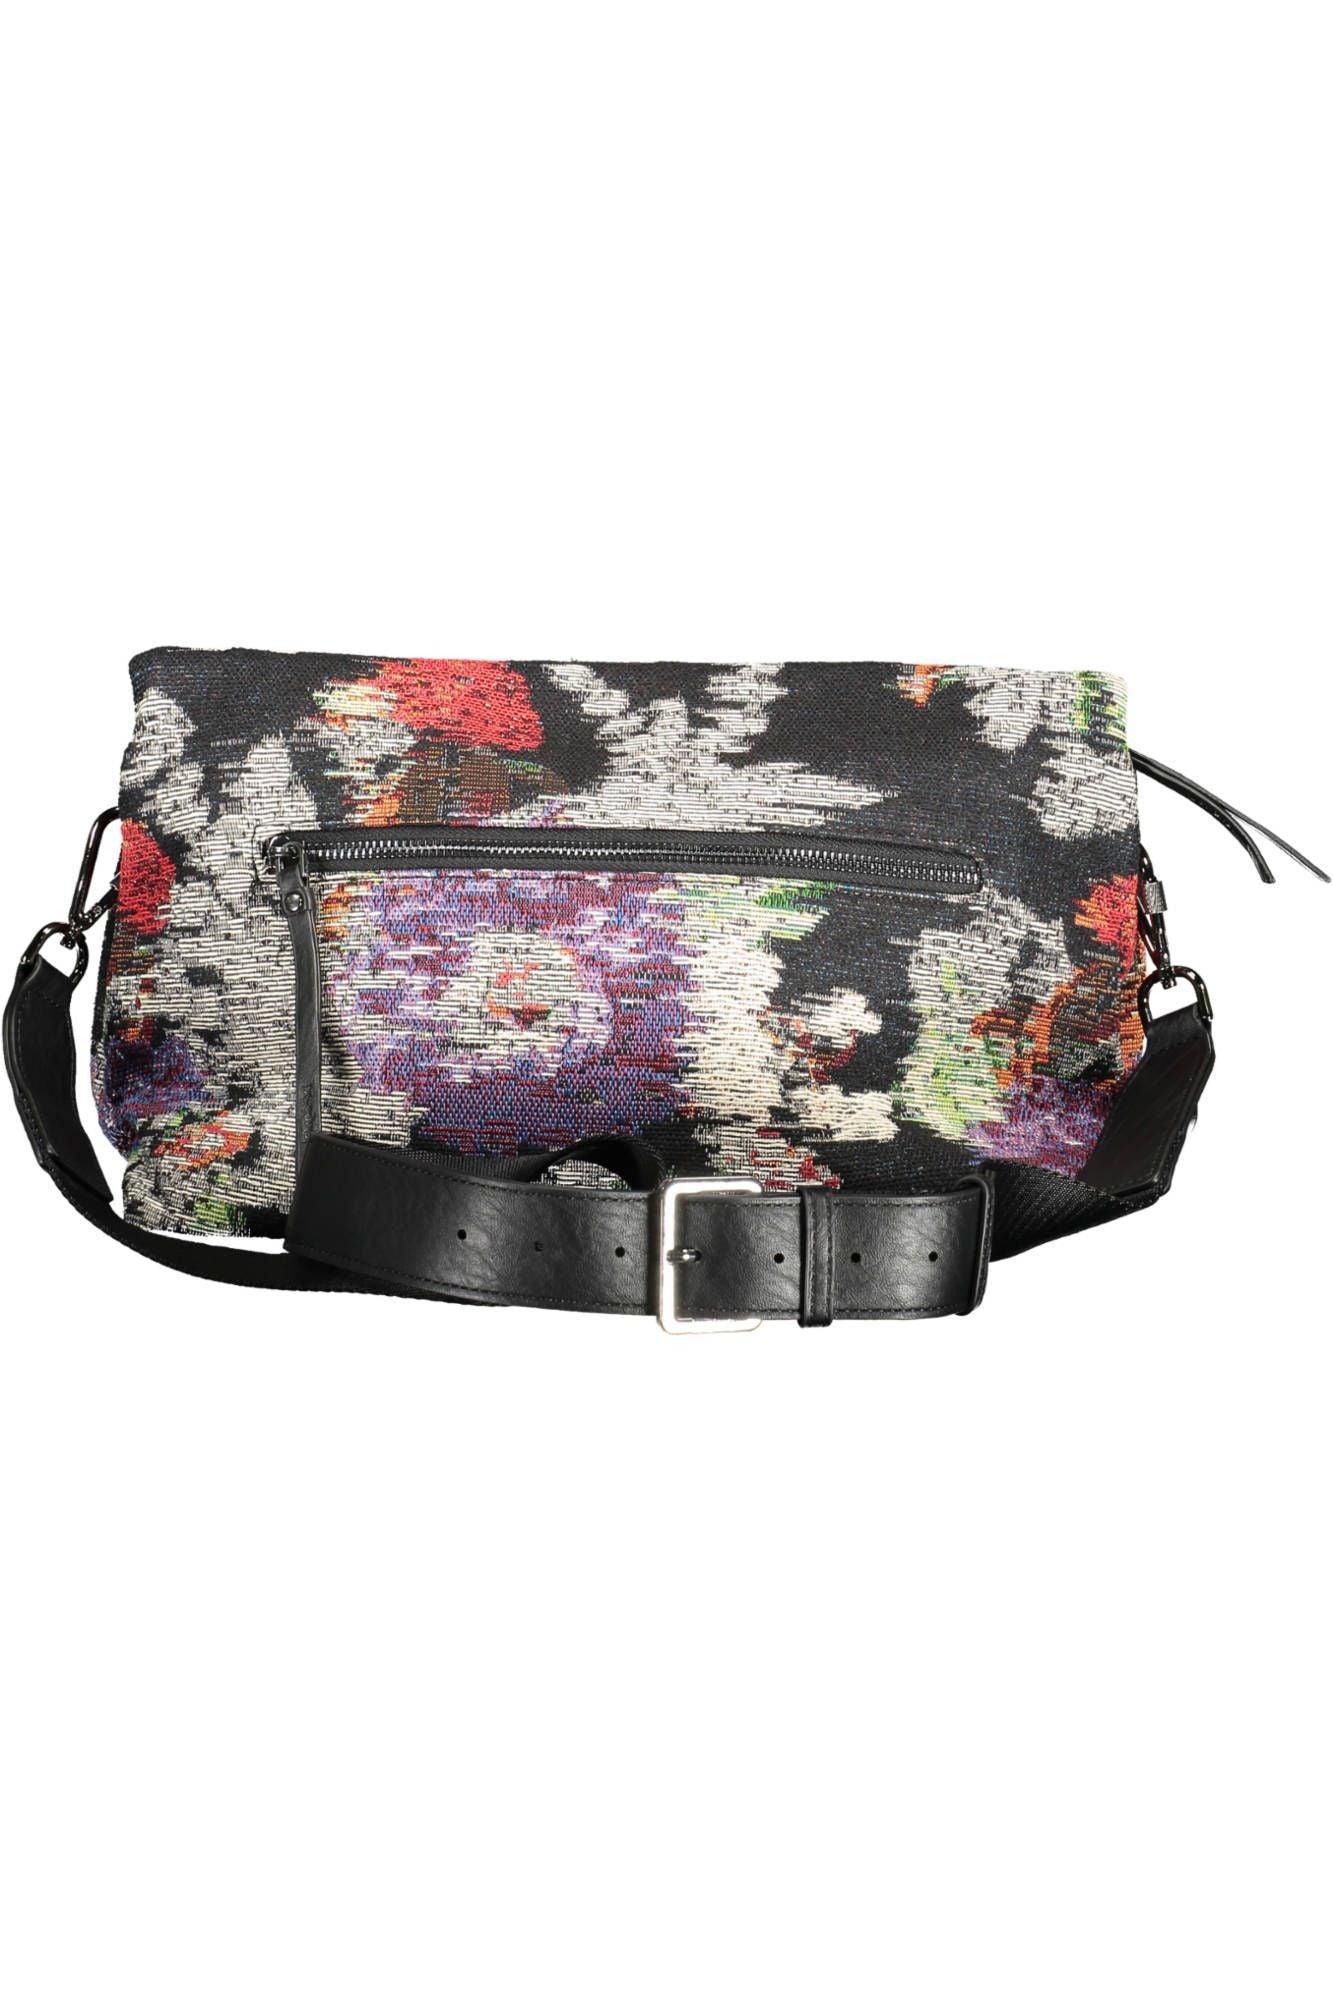 Desigual Chic Black Cotton Handbag with Contrasting Details - PER.FASHION